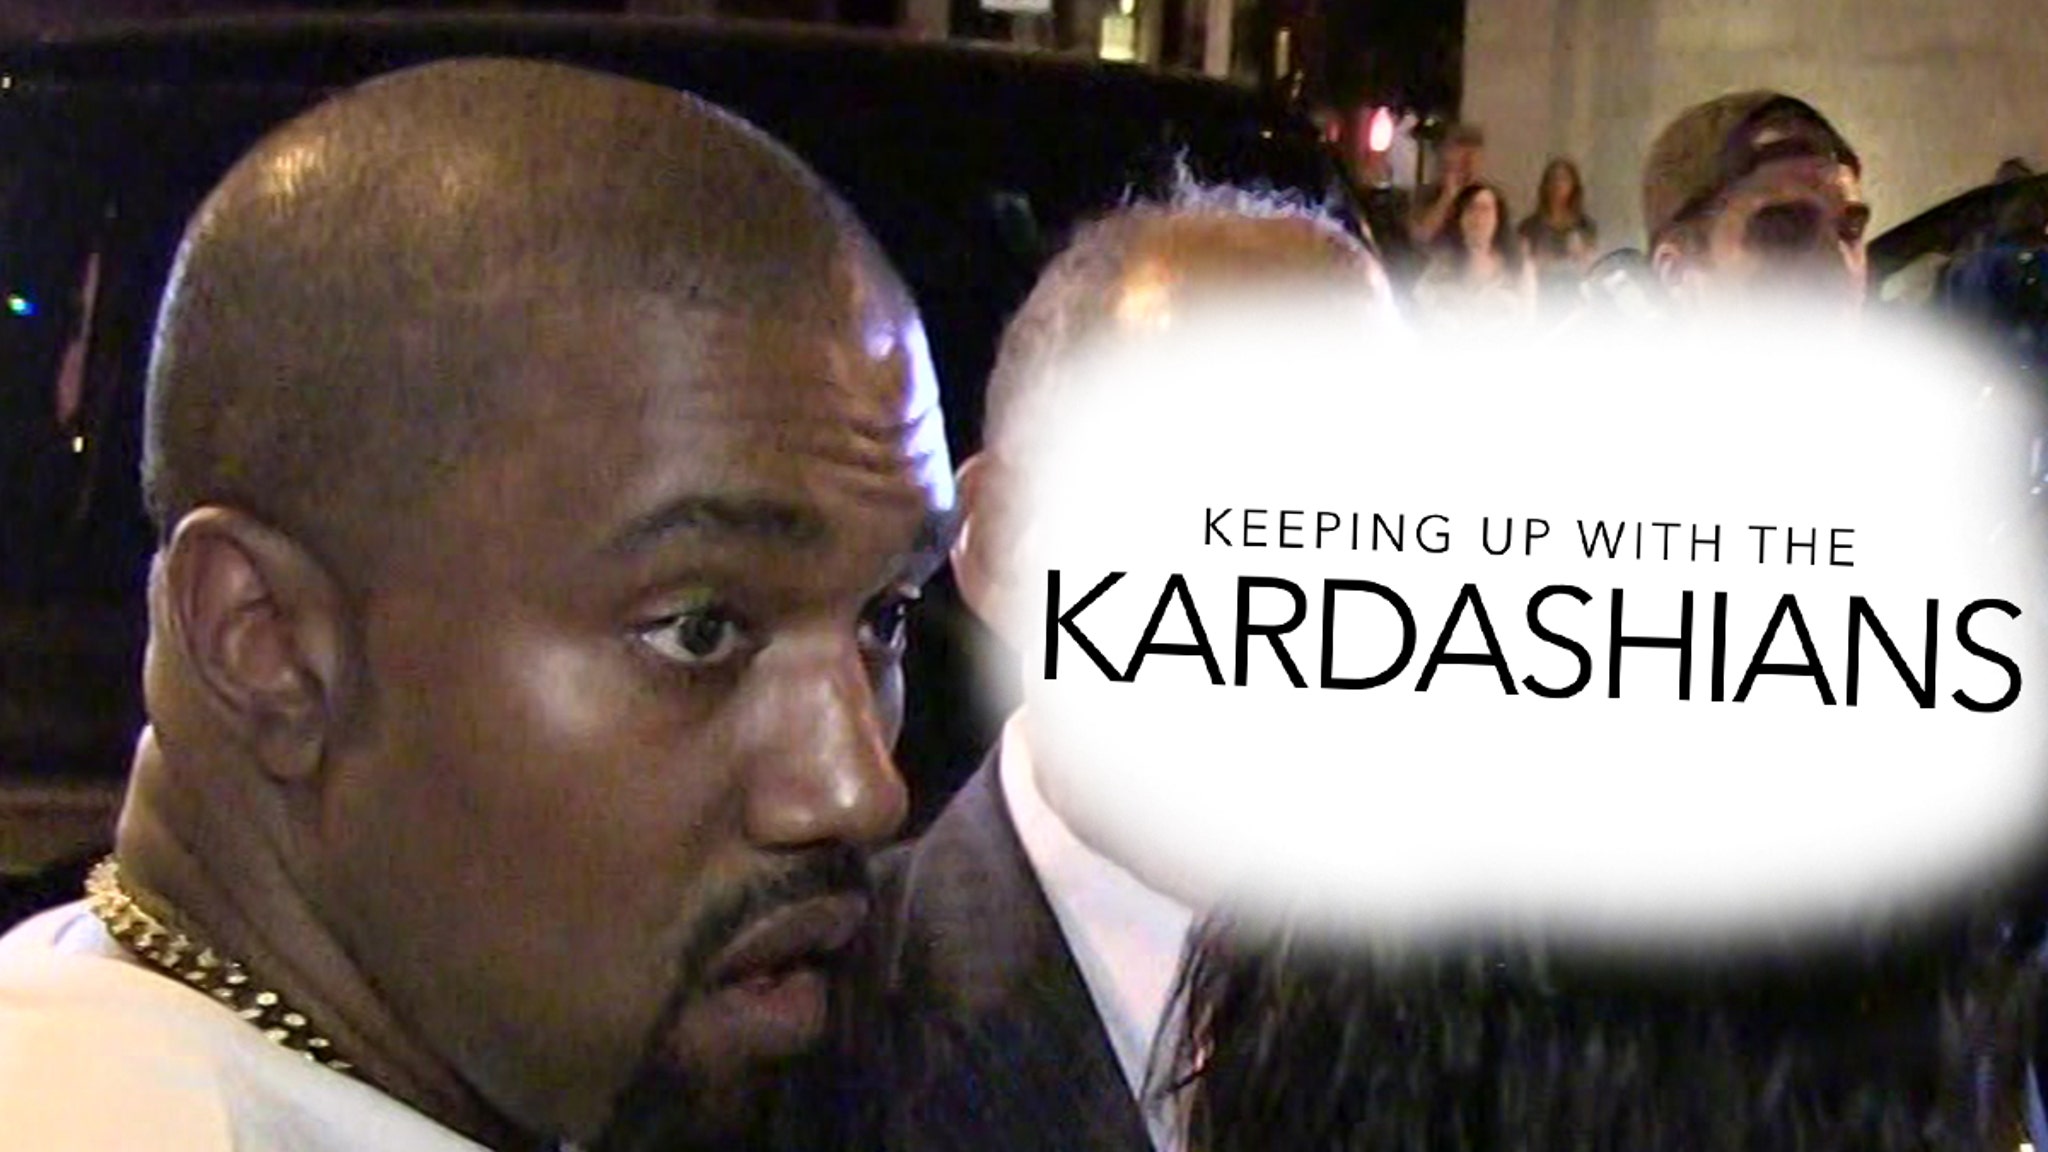 'Keeping Up with the Kardashians' Not Filming Kanye's Bipolar Episode - TMZ